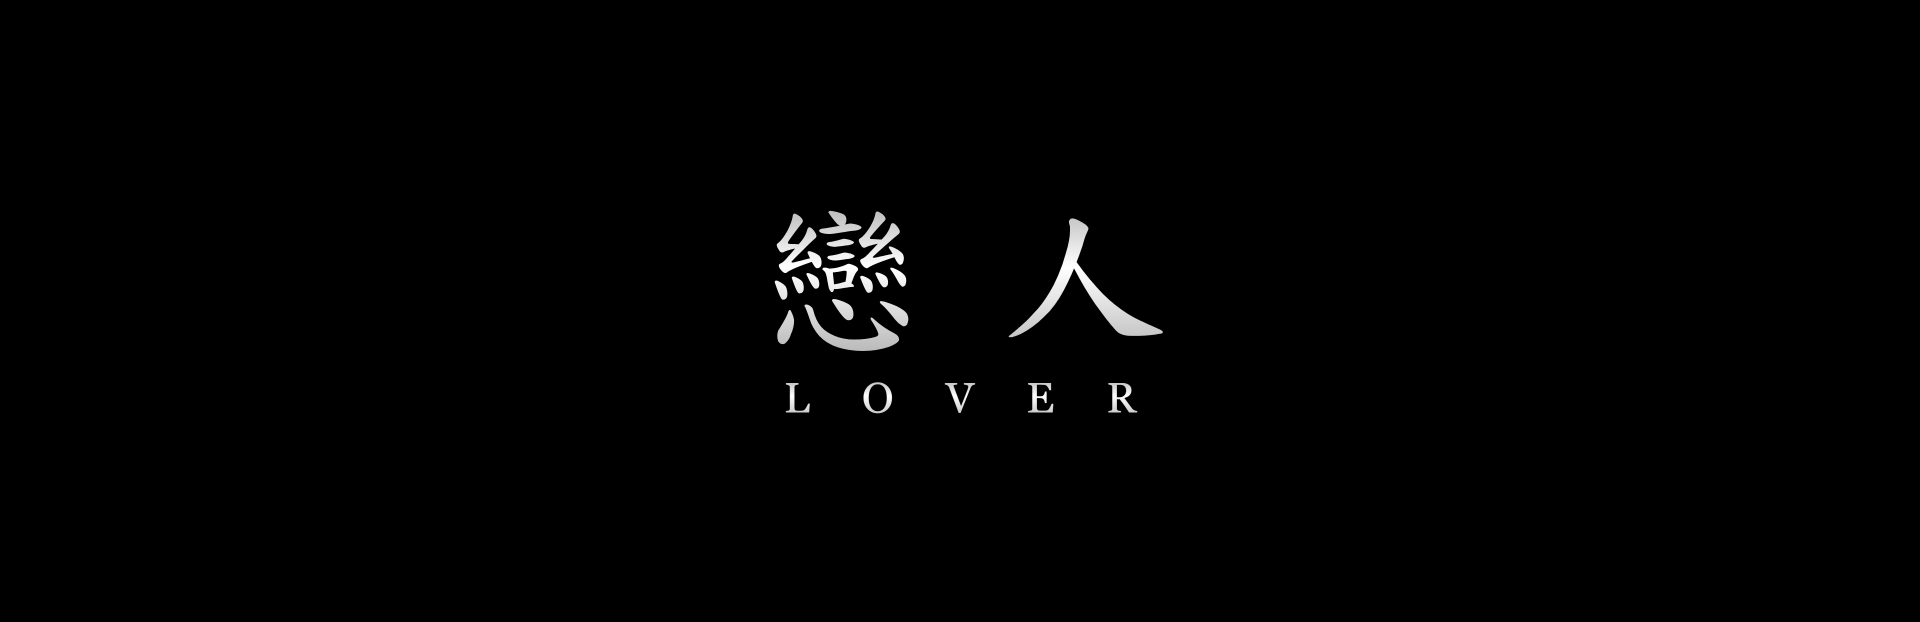 Lover Demo